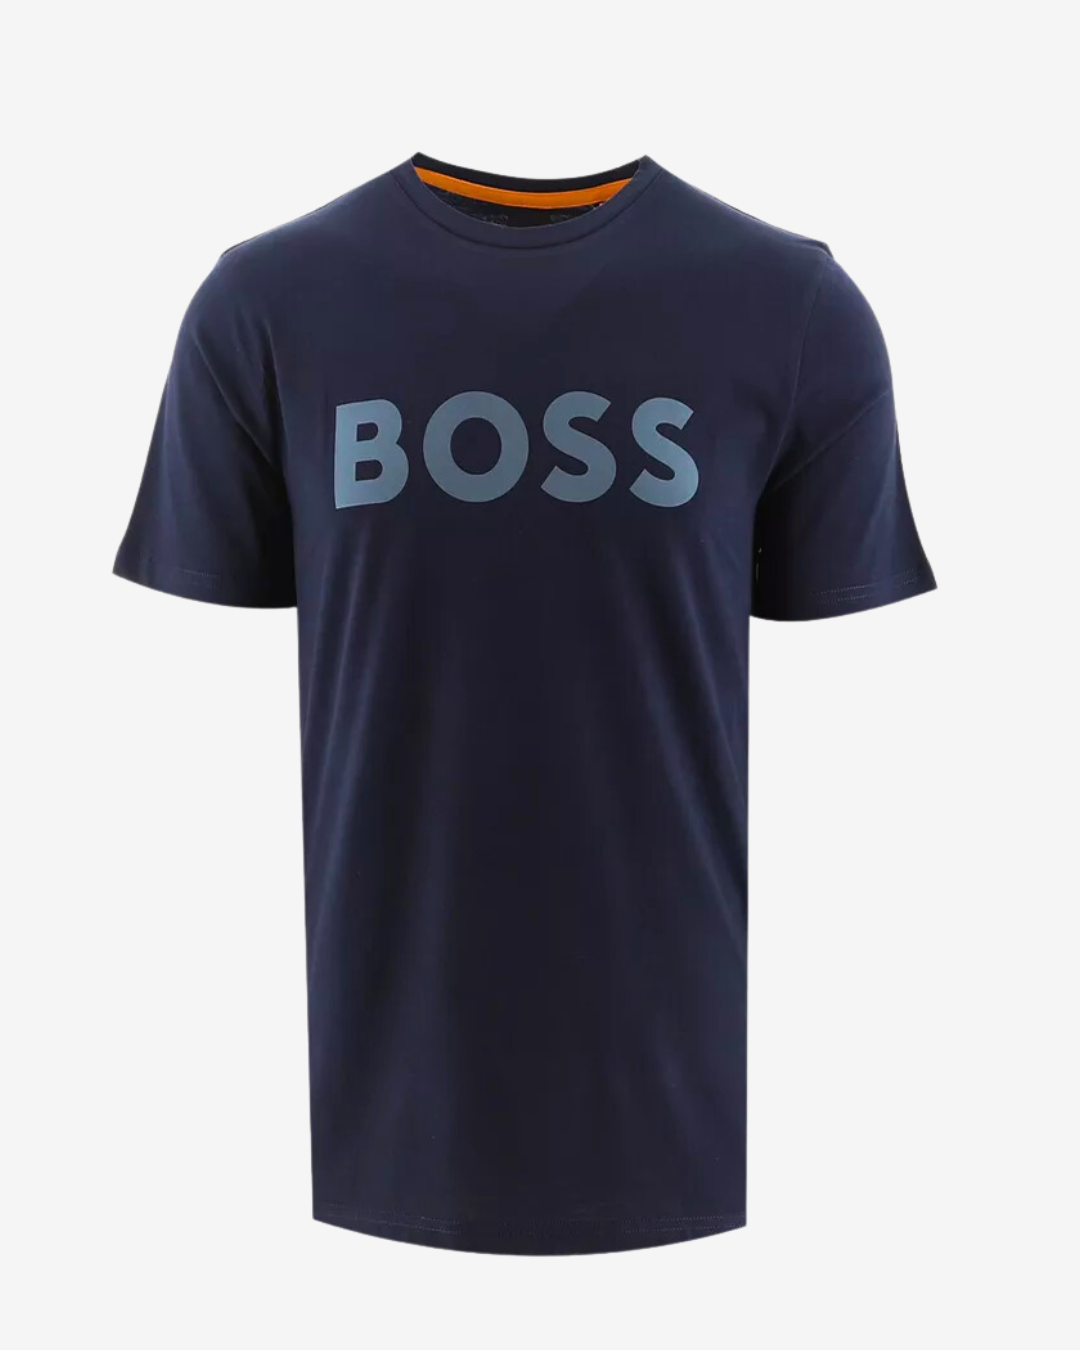 Billede af Hugo Boss Thinking logo t-shirt - Navy / Blå - Str. 3XL - Modish.dk